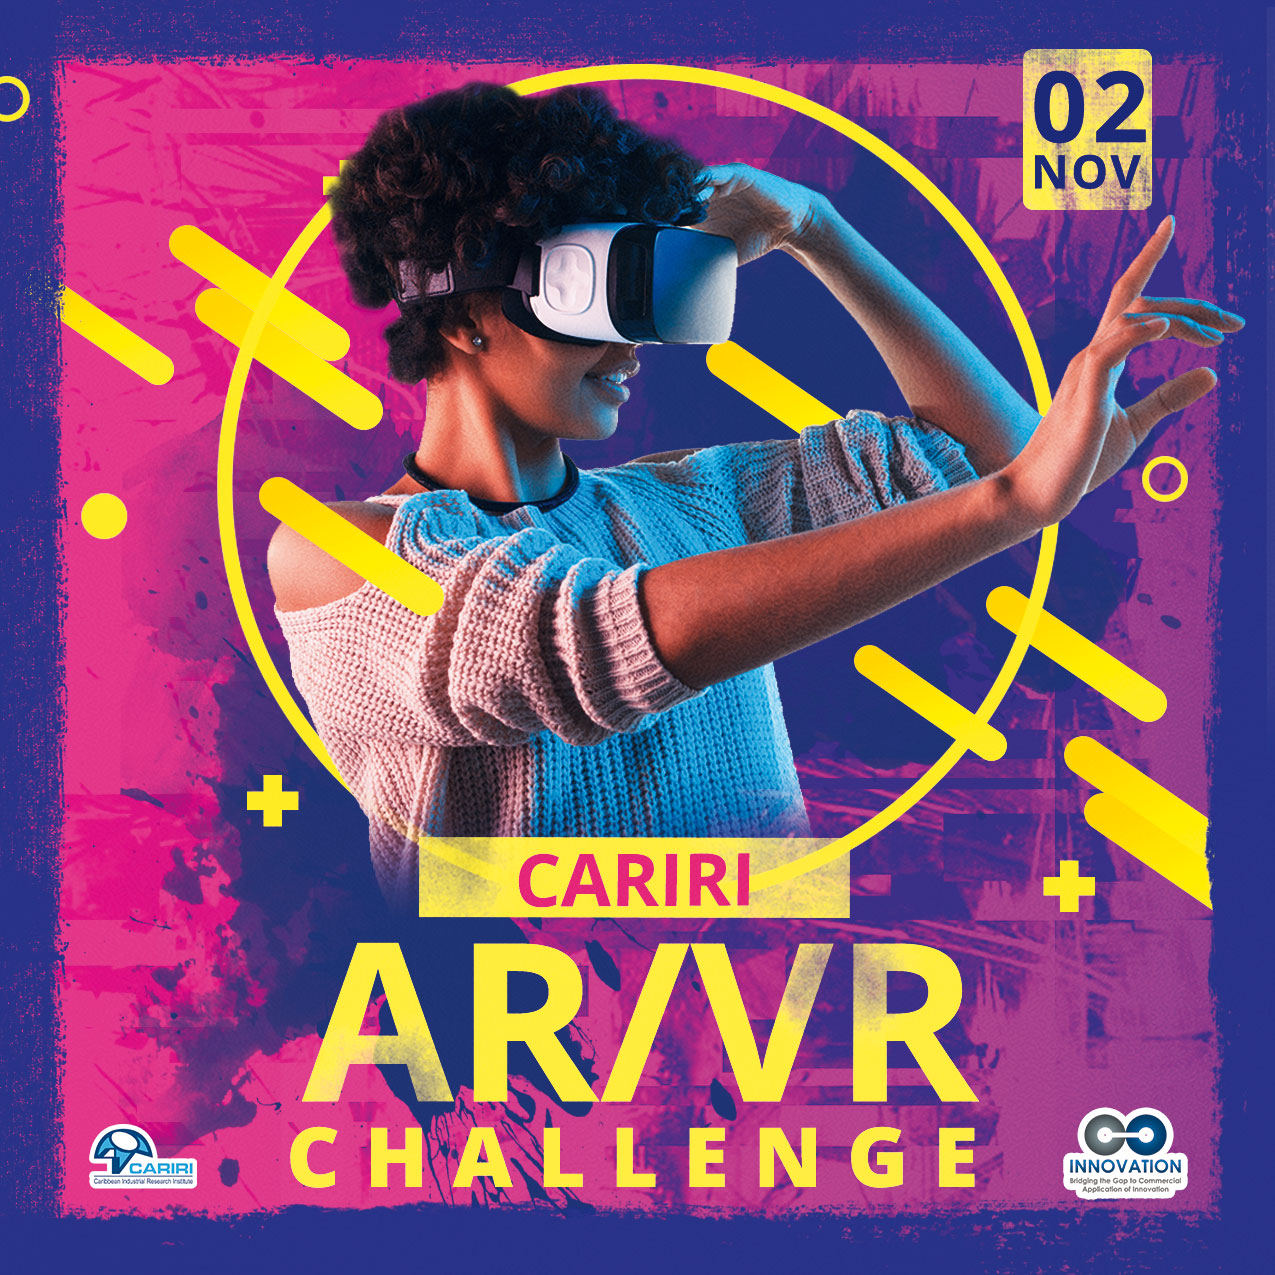 A Teaser Image for the CAIRIR AR/VR Challenge